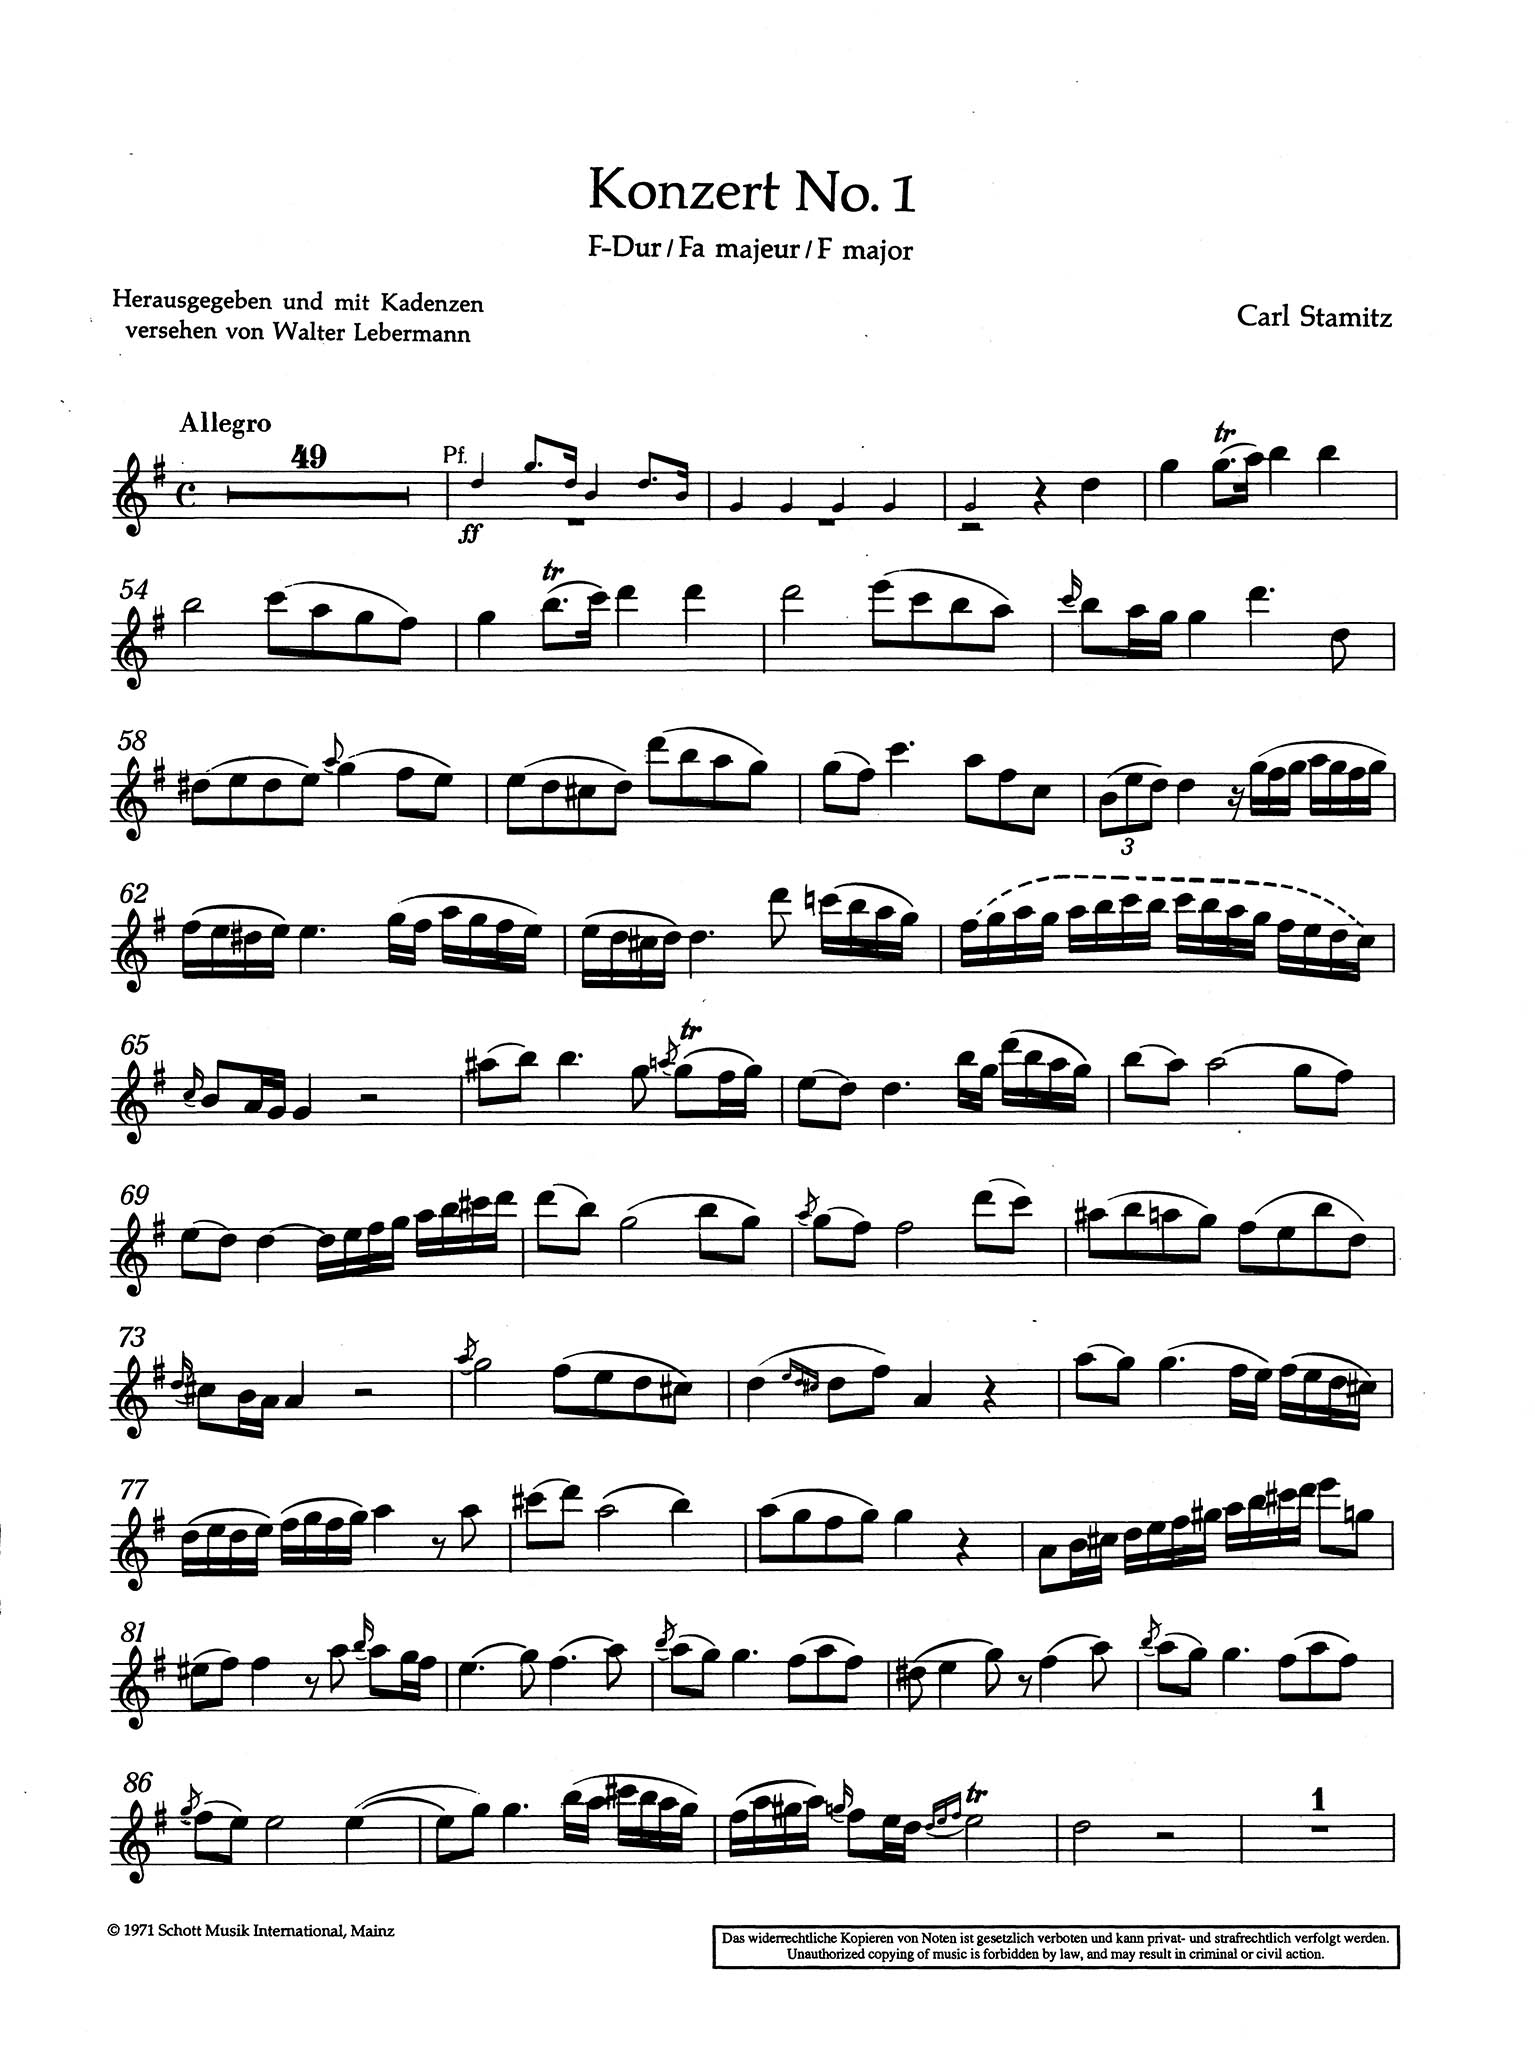 Clarinet Concerto No. 1 (Kaiser) in F Major B-flat Clarinet part